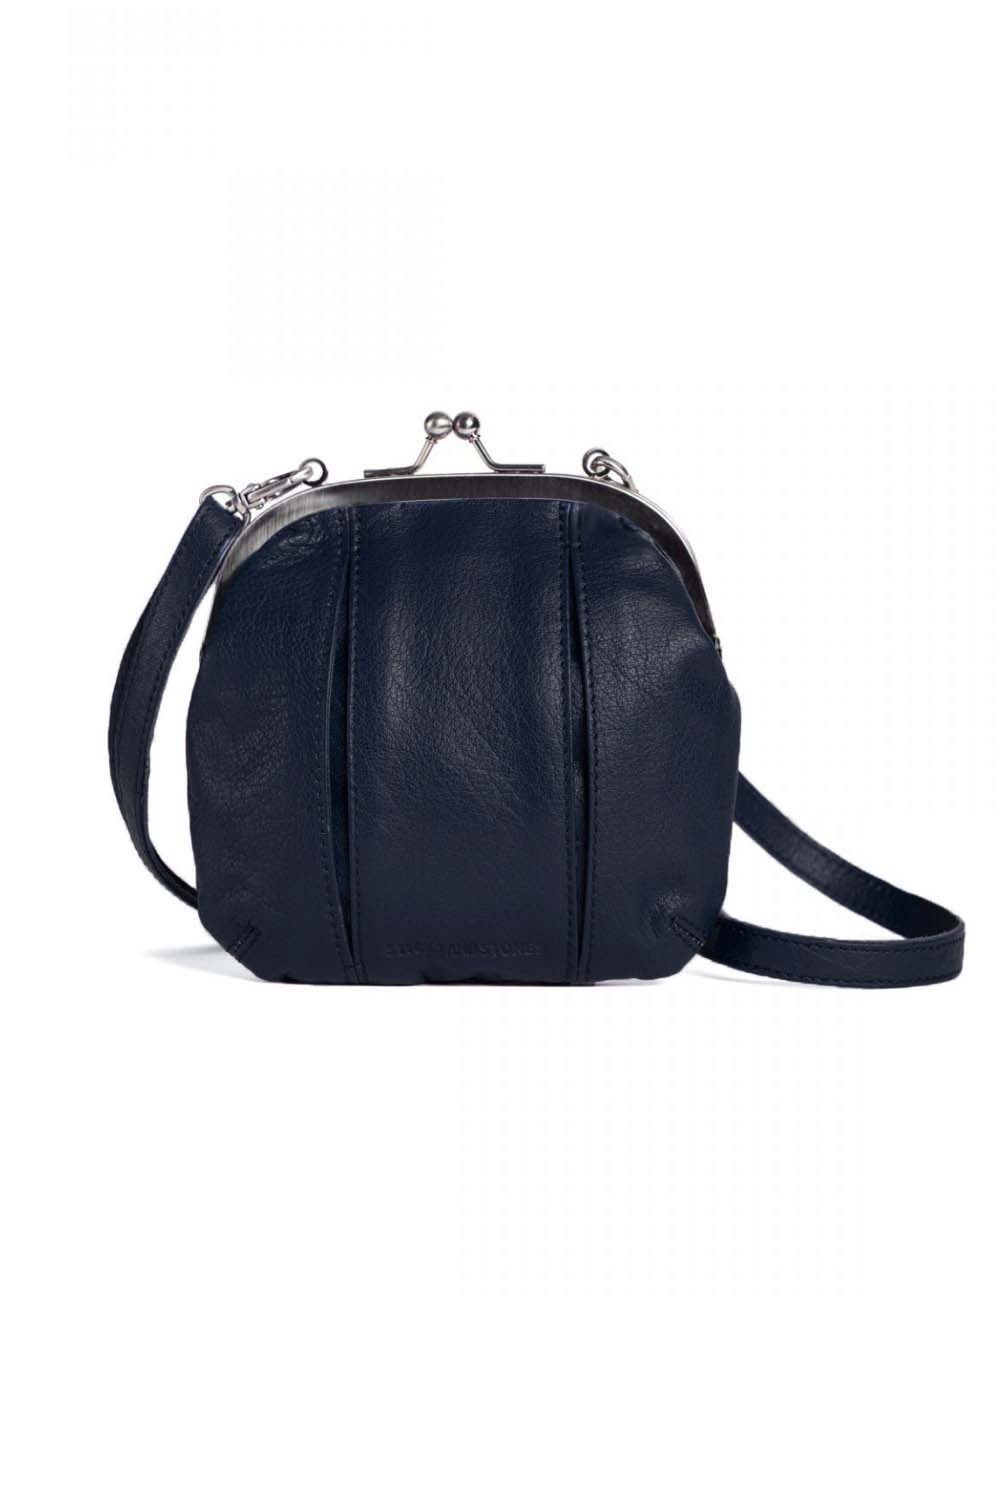 Ravenna bag - Buff Washed Dark blue